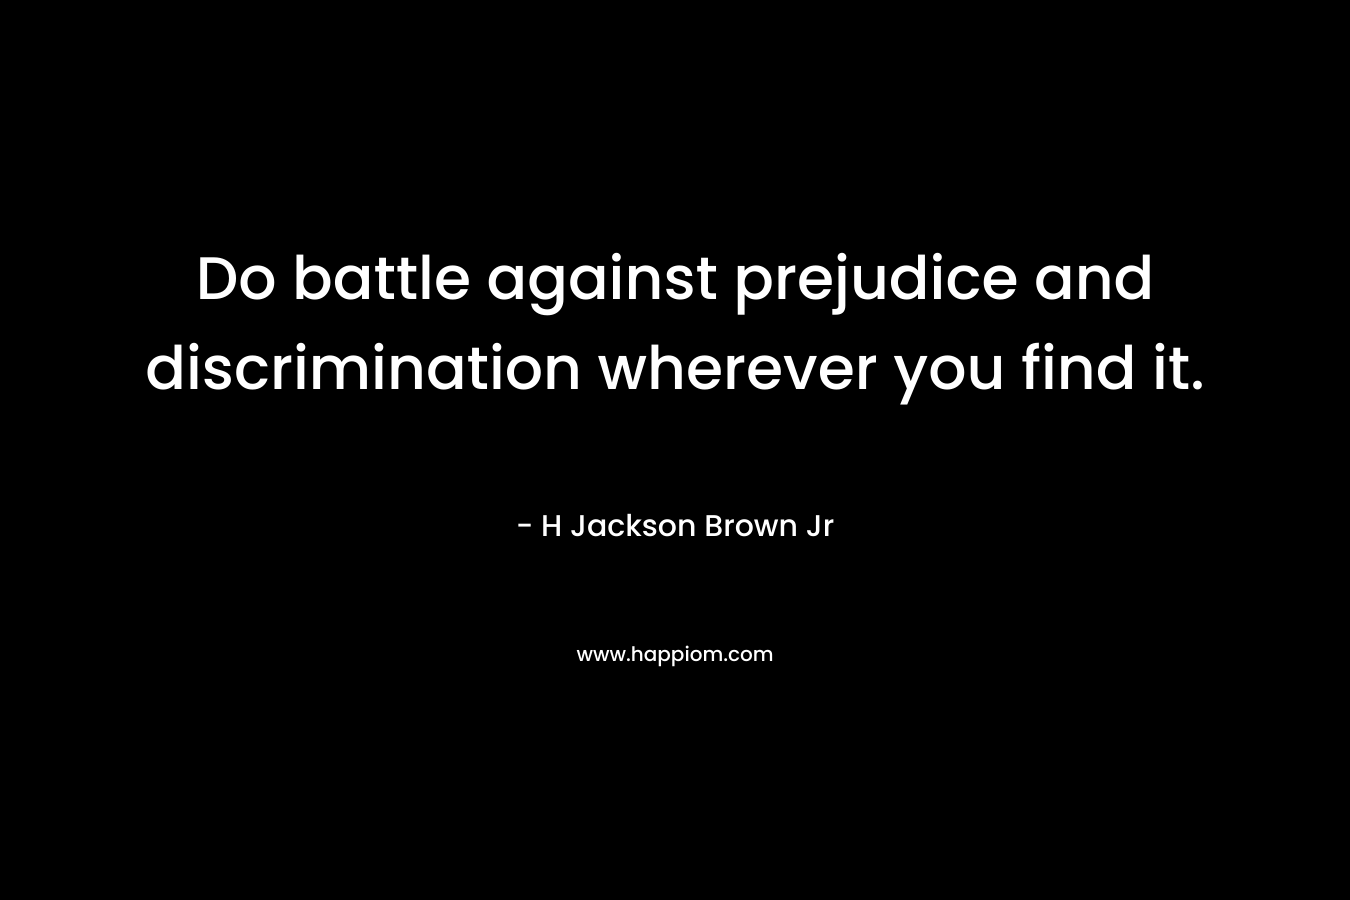 Do battle against prejudice and discrimination wherever you find it.